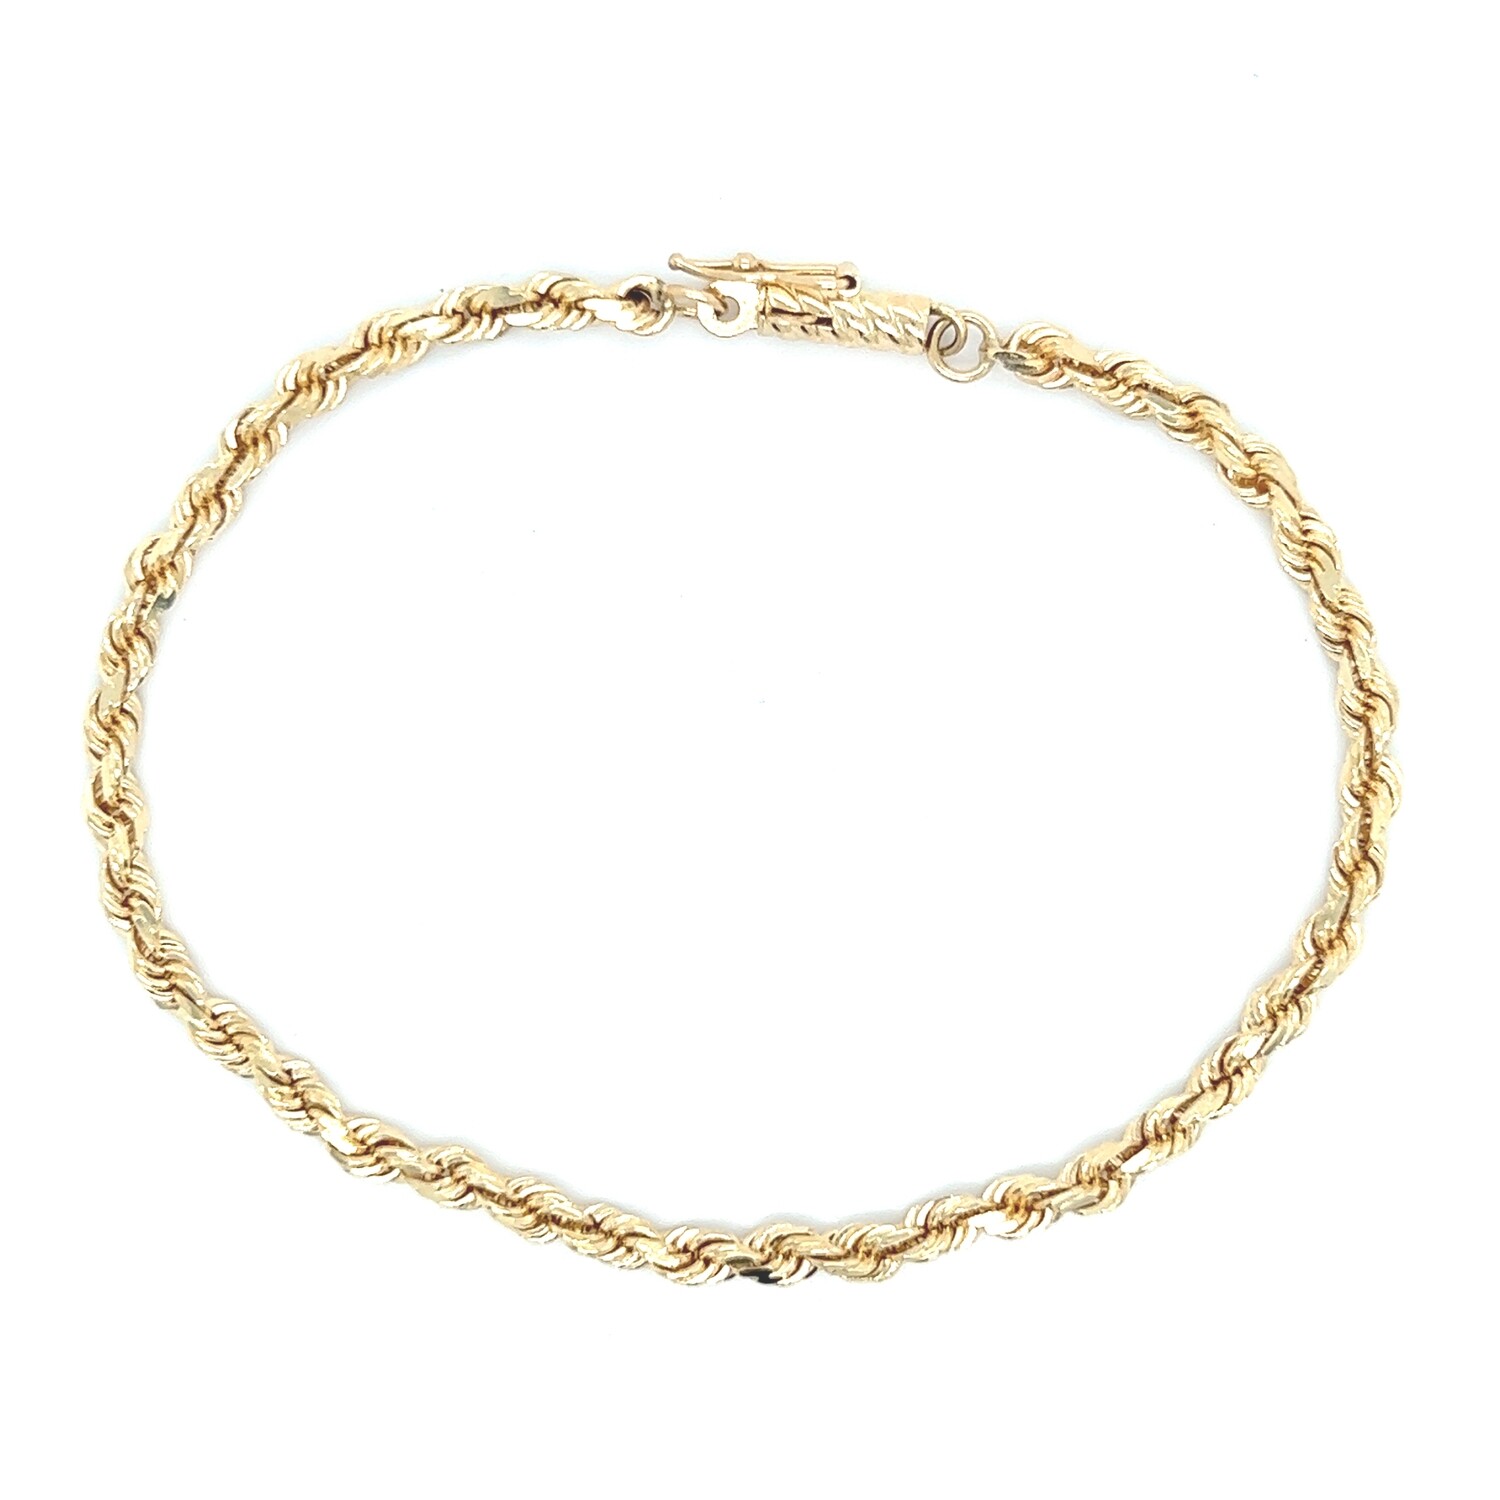 Rope Bracelet in 14k Yellow Gold — 7.5”